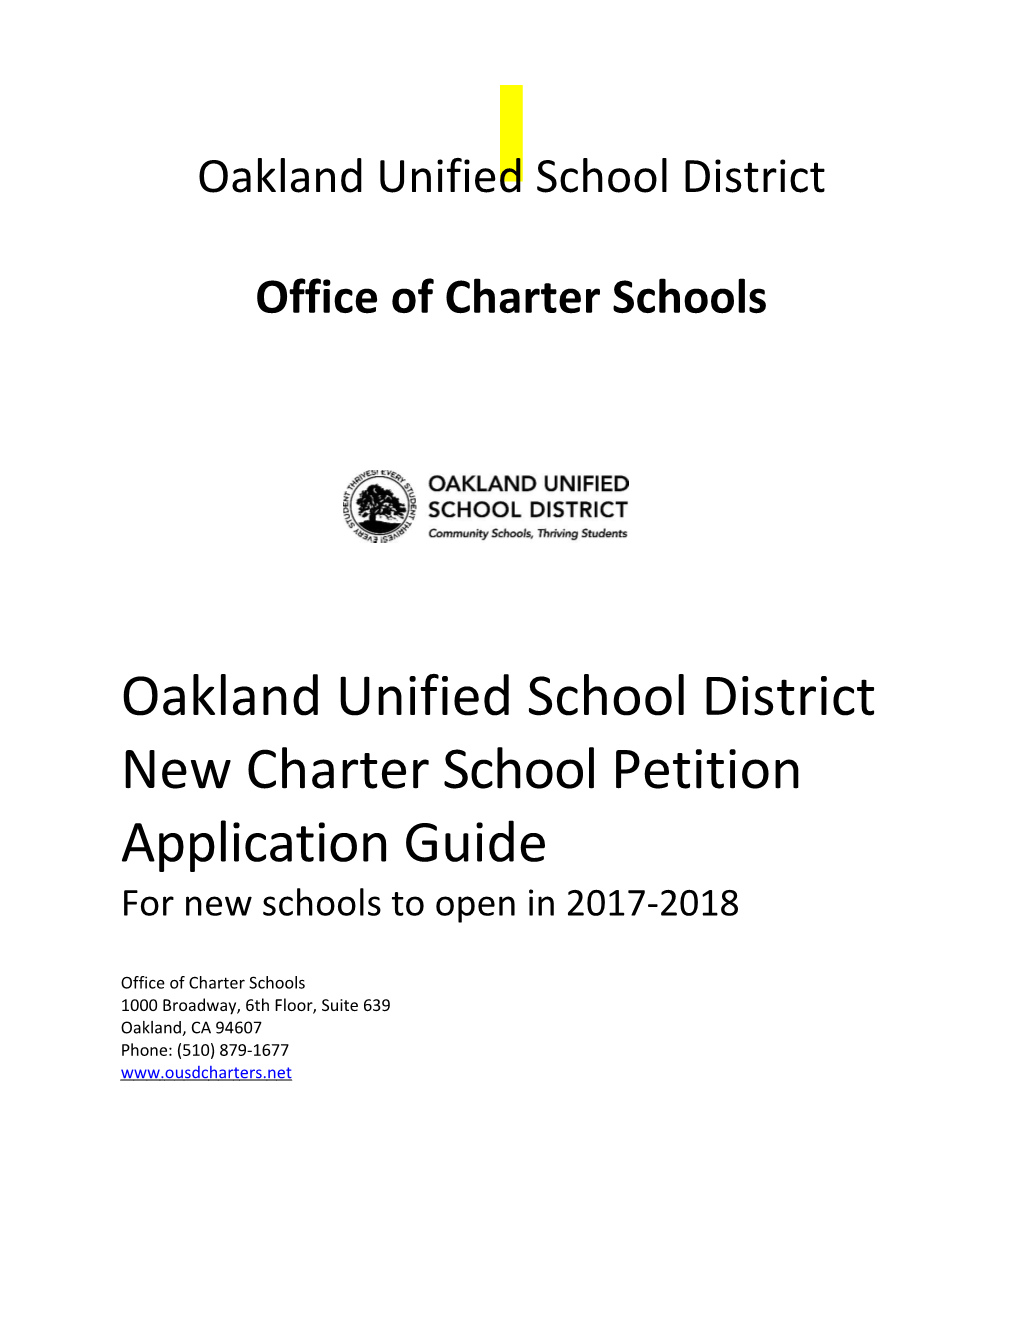 Officeof Charterschools